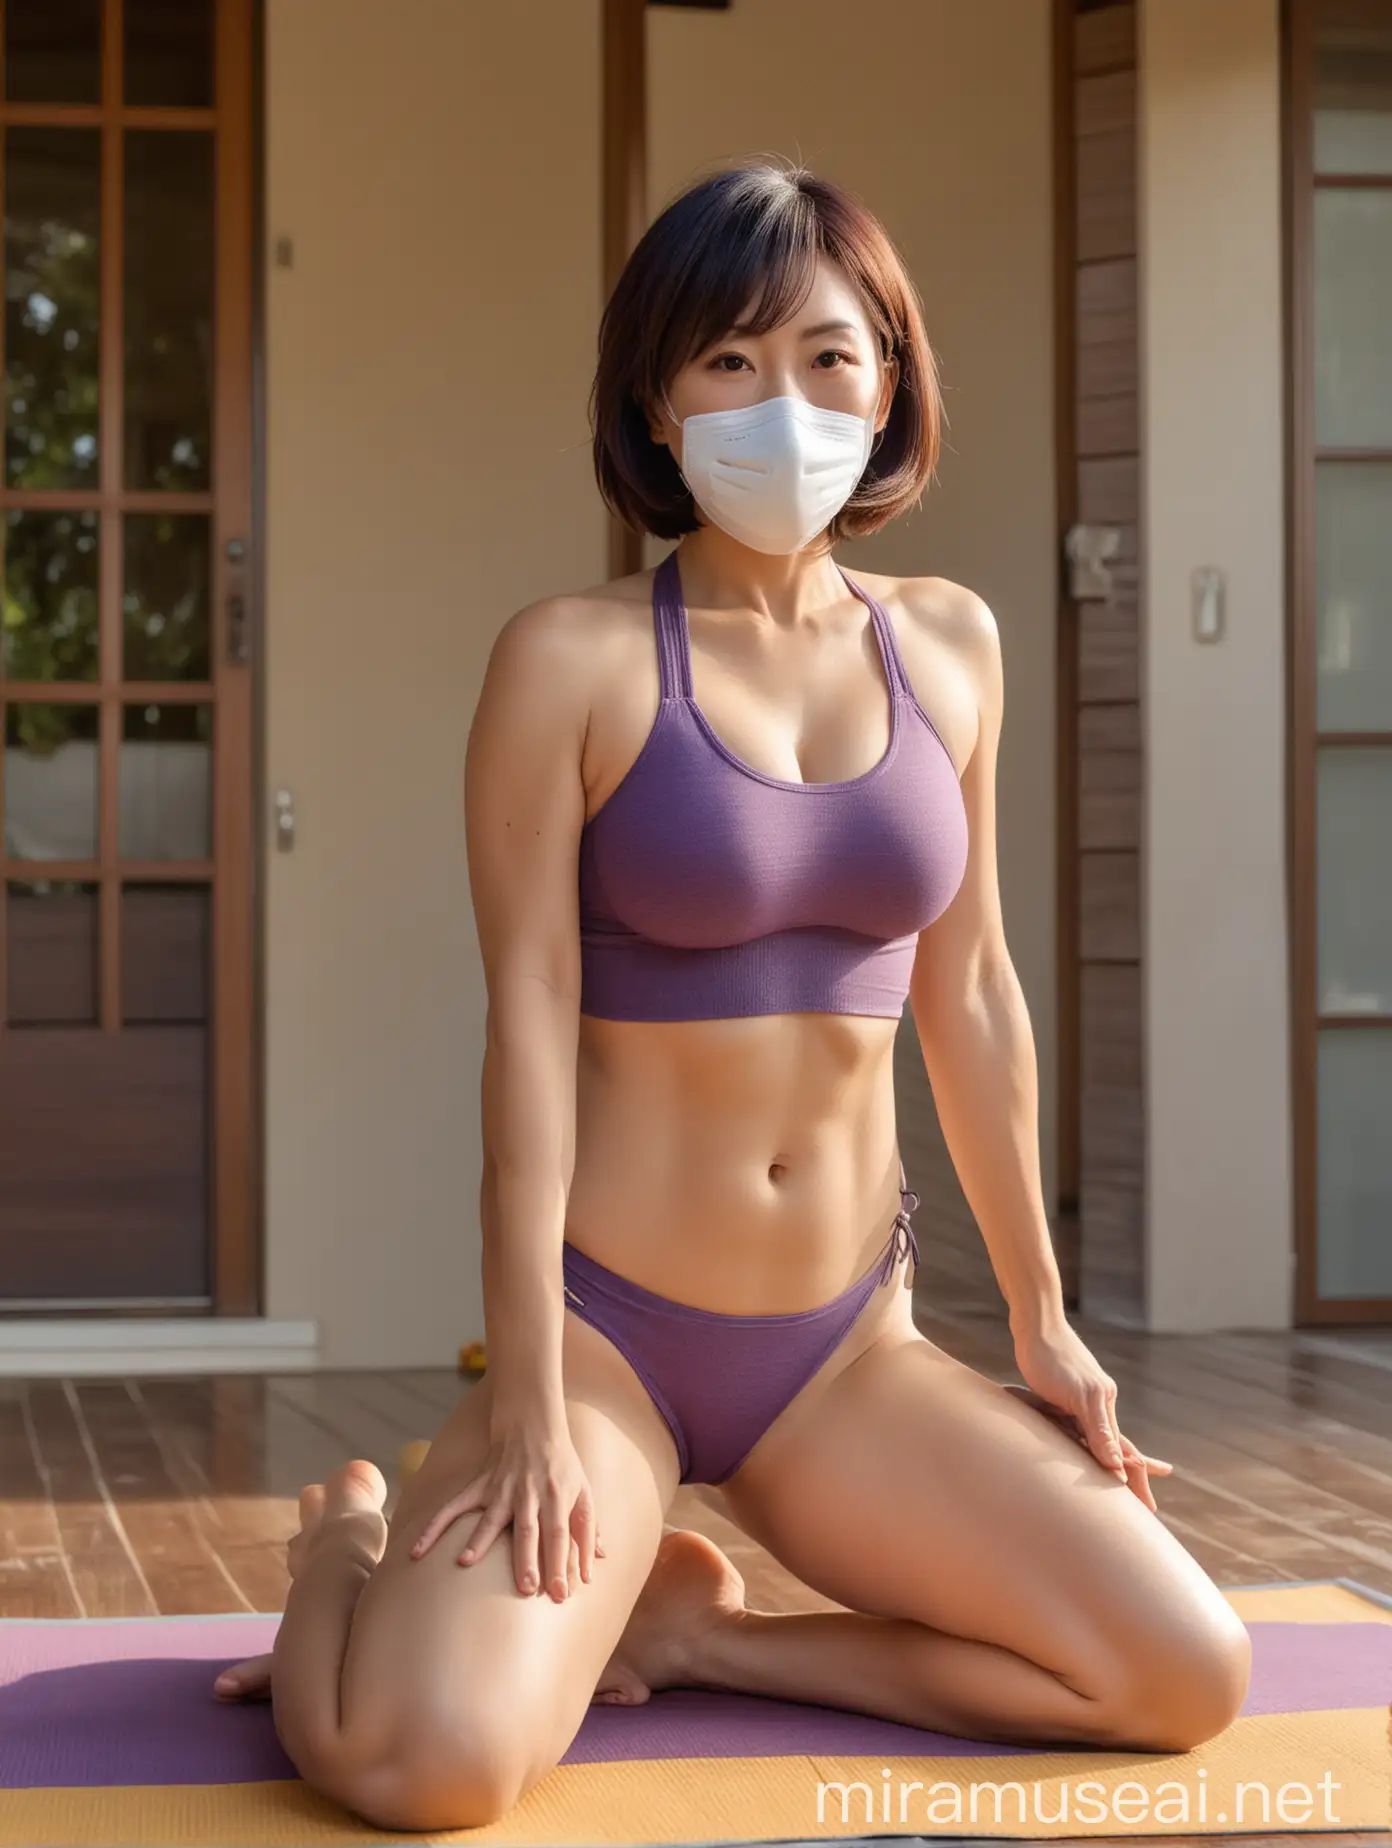 Japanese Woman in Knit FrenchCut Bikini Doing Yoga by Southwestern Style House